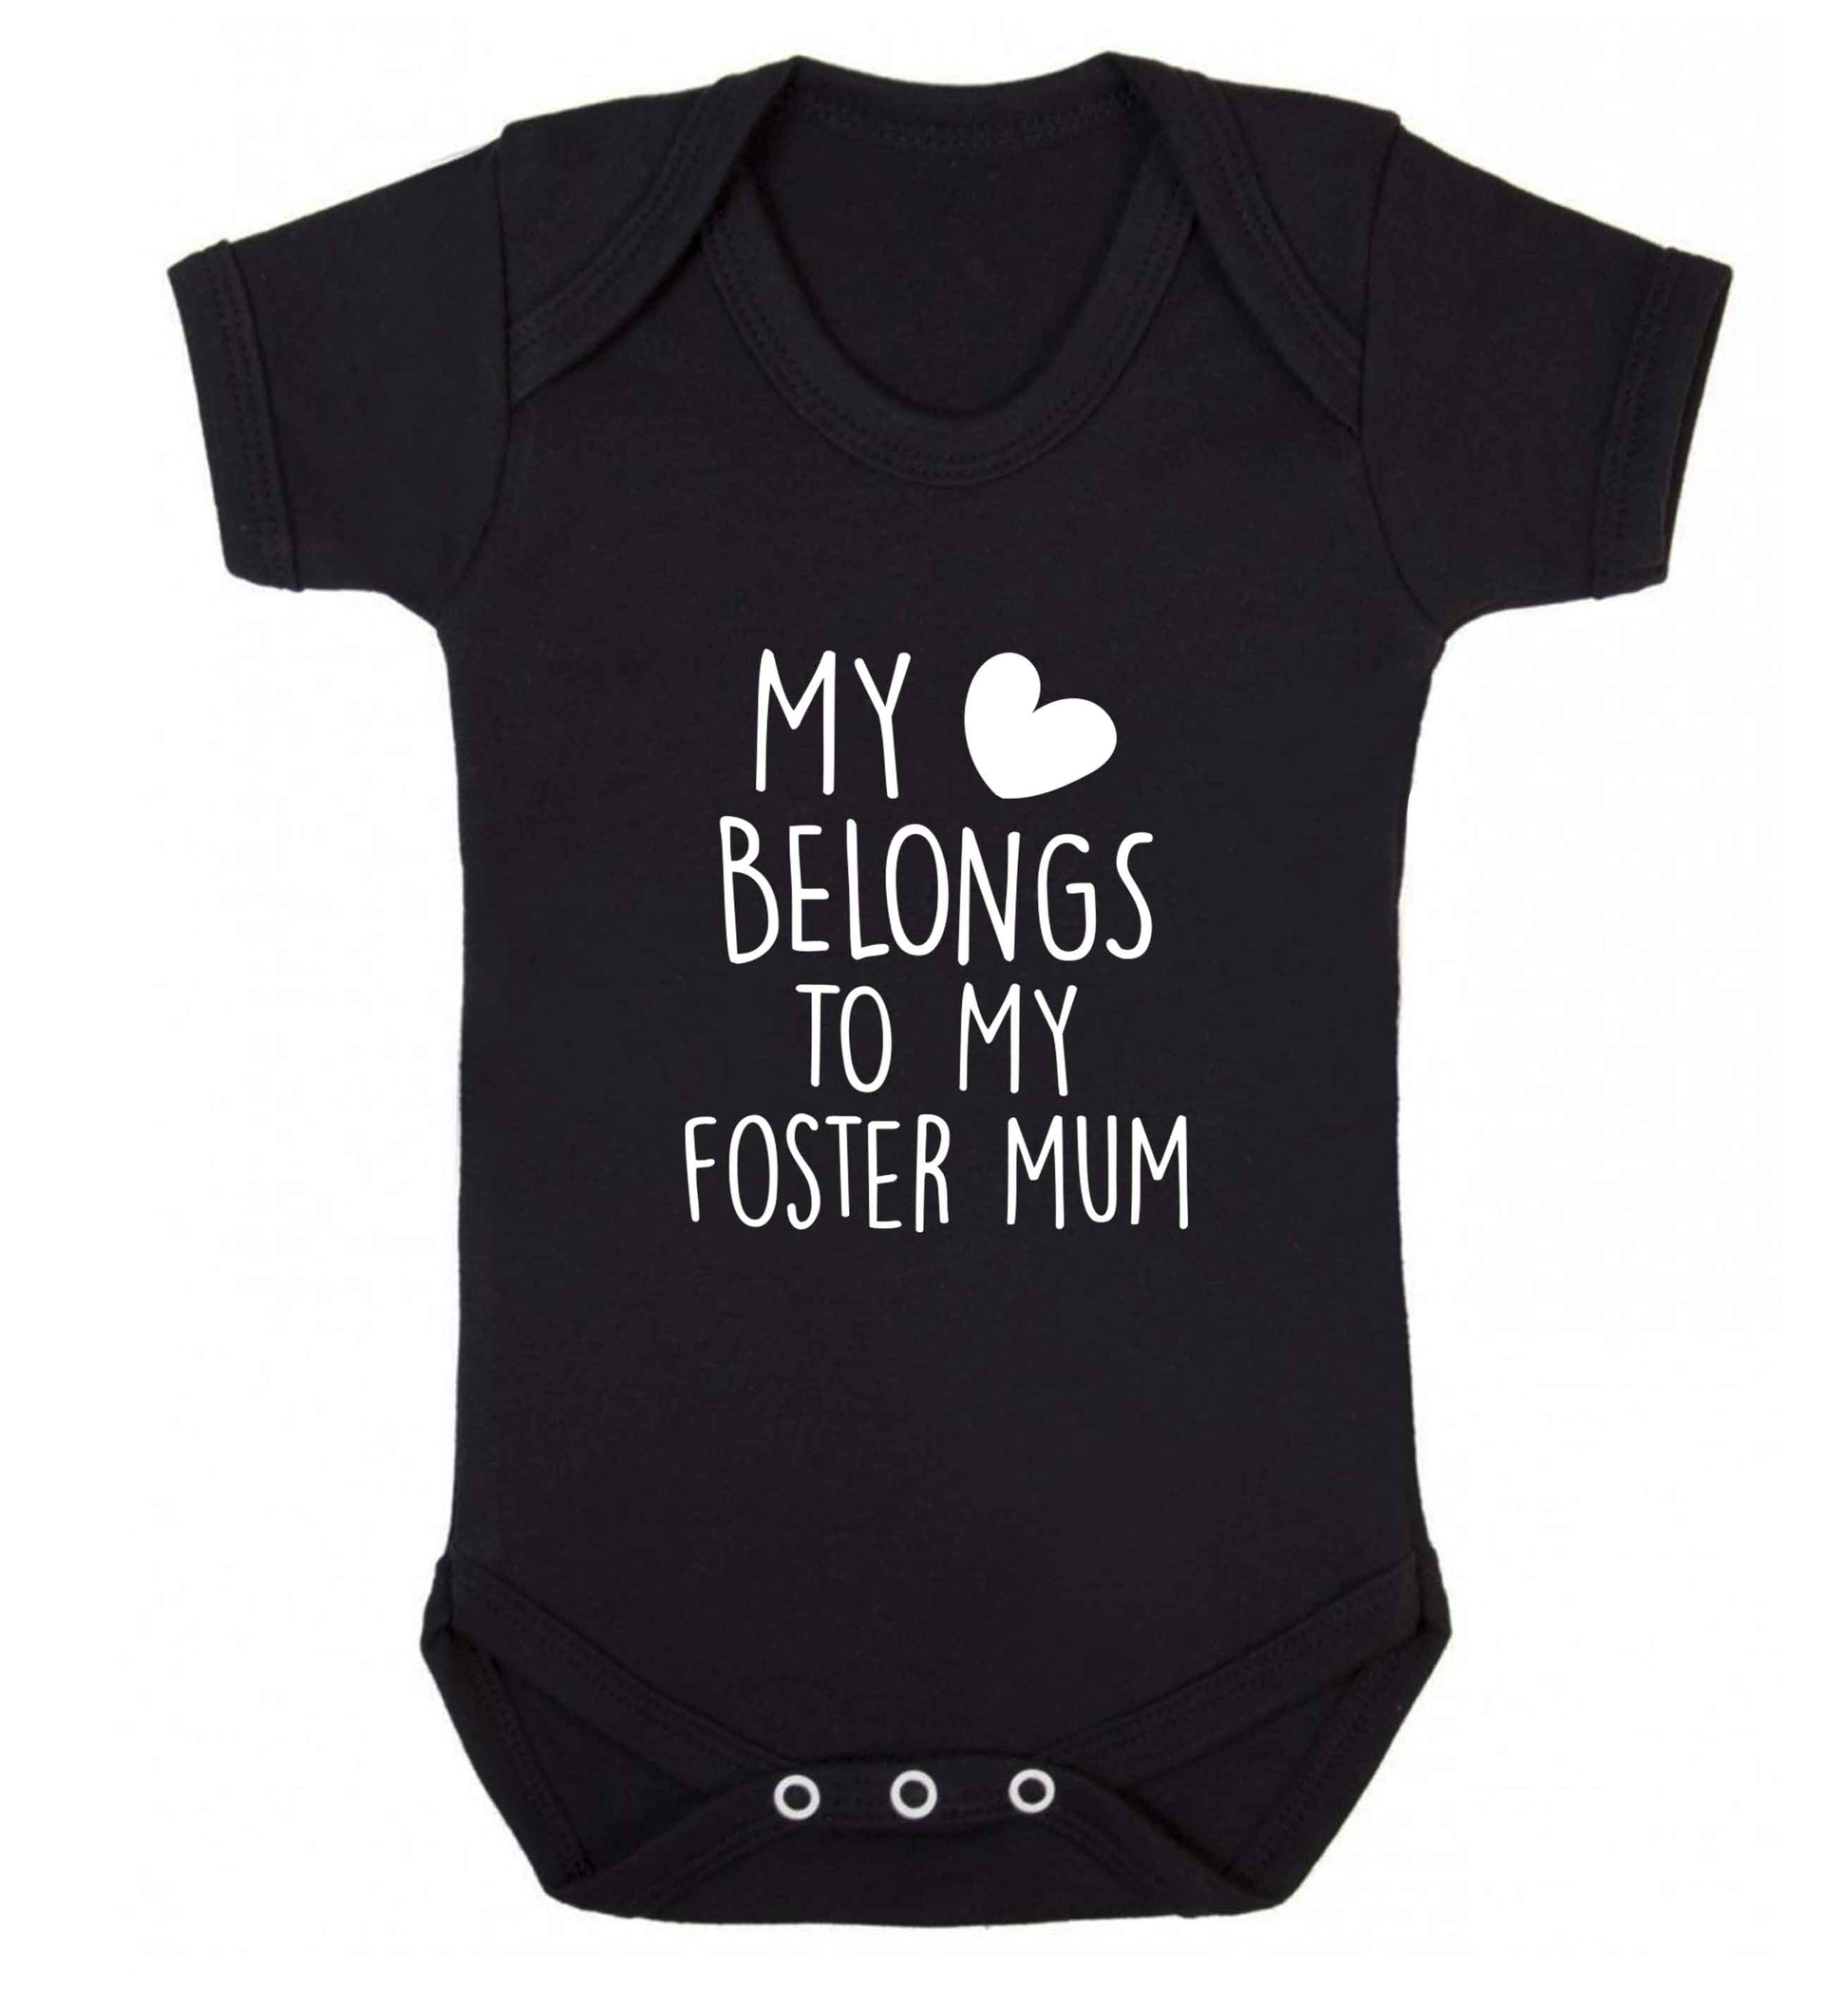 My heart belongs to my foster mum baby vest black 18-24 months